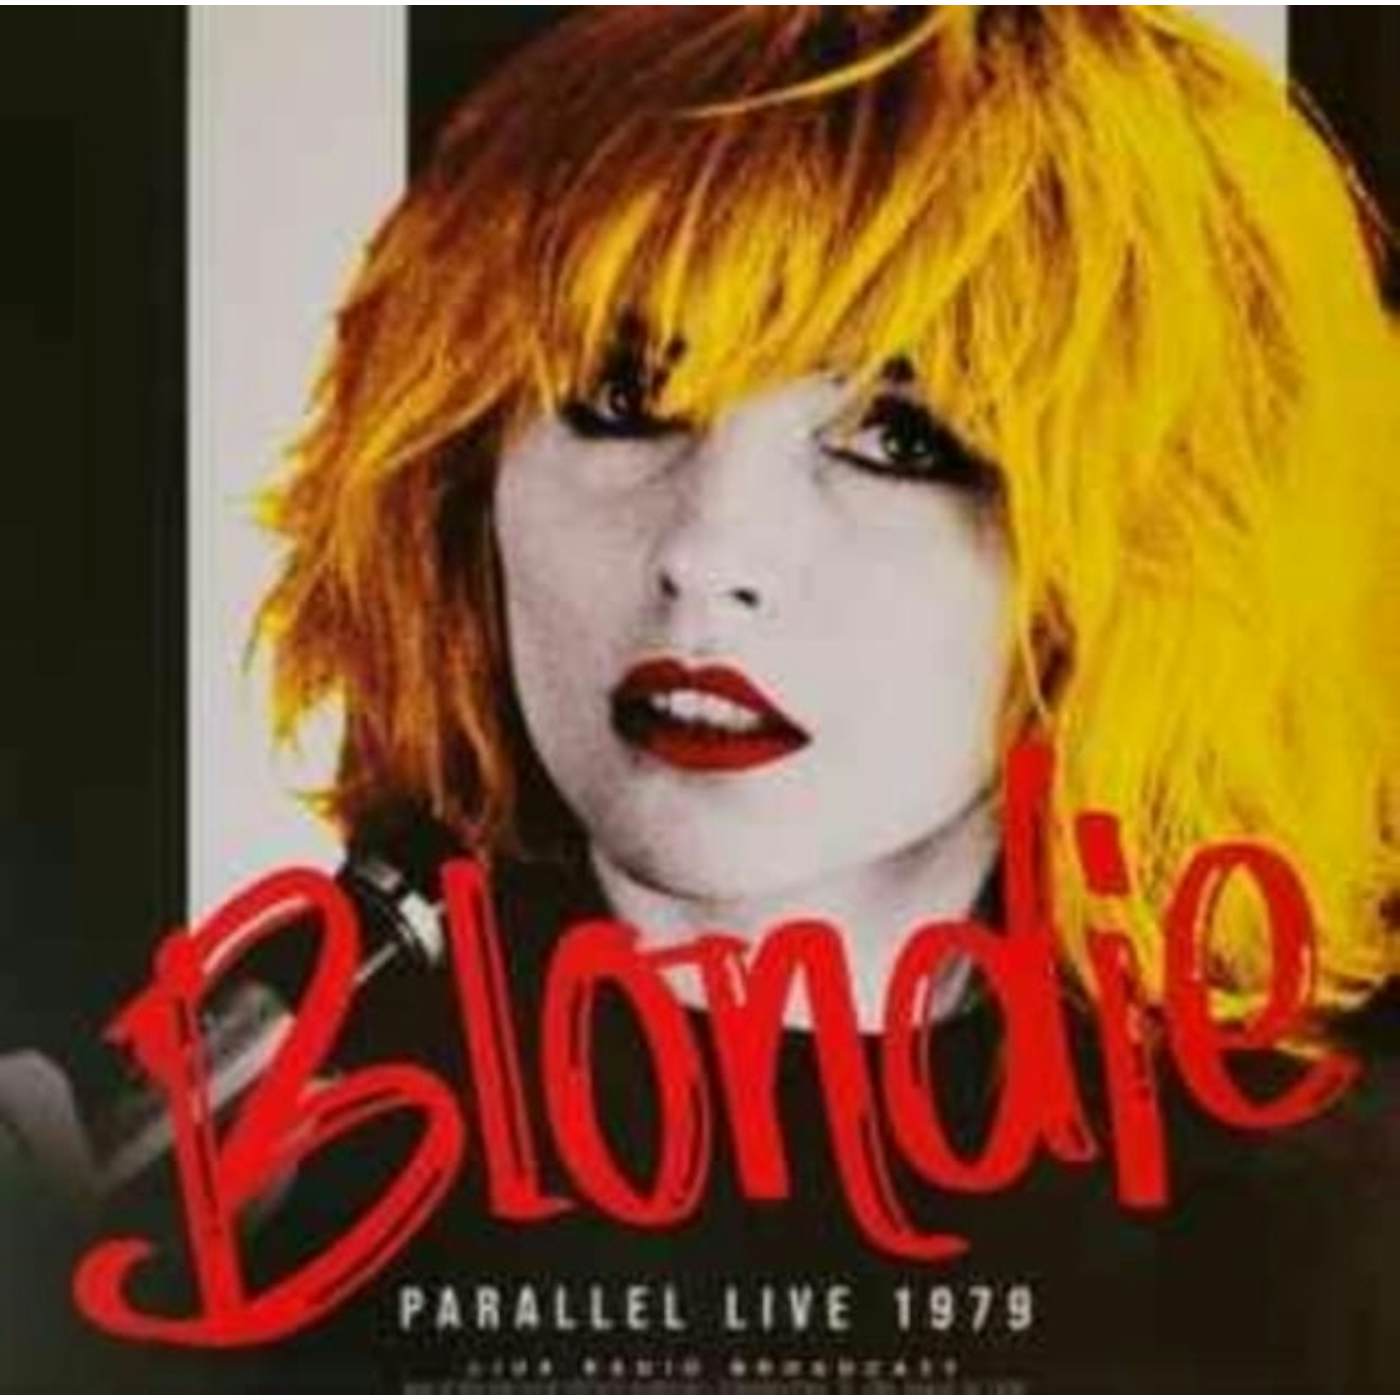 Blondie LP Vinyl Record - Parallel Live 19 79